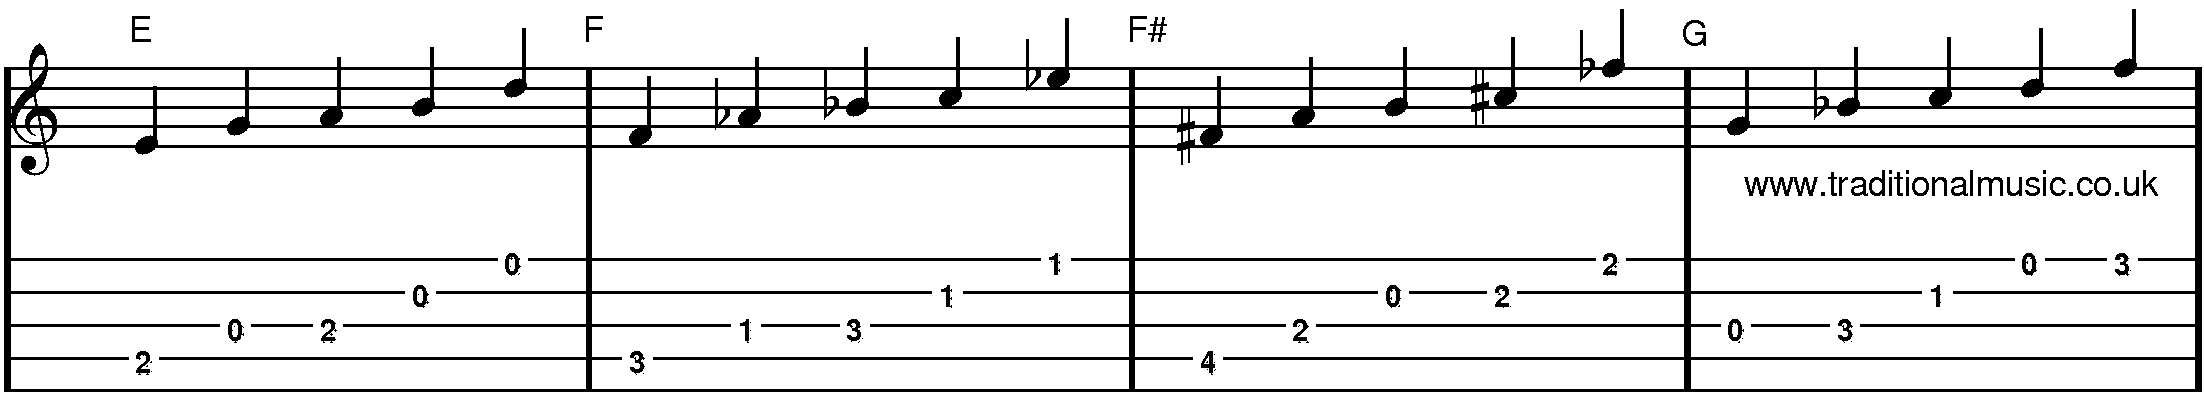 Minor Pentatonic Scales for Banjo E to G